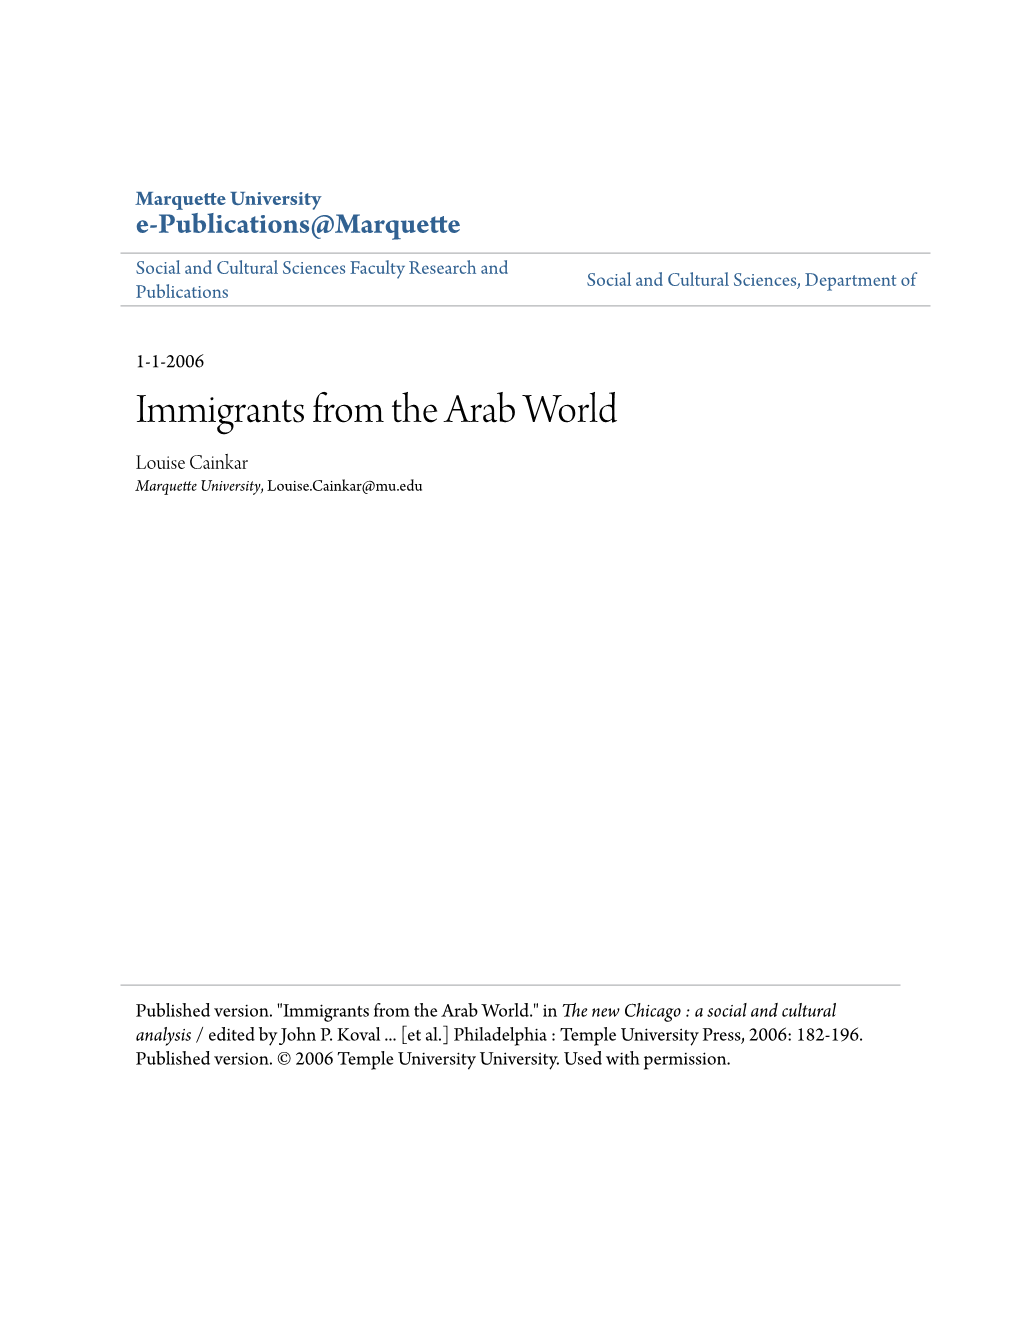 Immigrants from the Arab World Louise Cainkar Marquette University, Louise.Cainkar@Mu.Edu